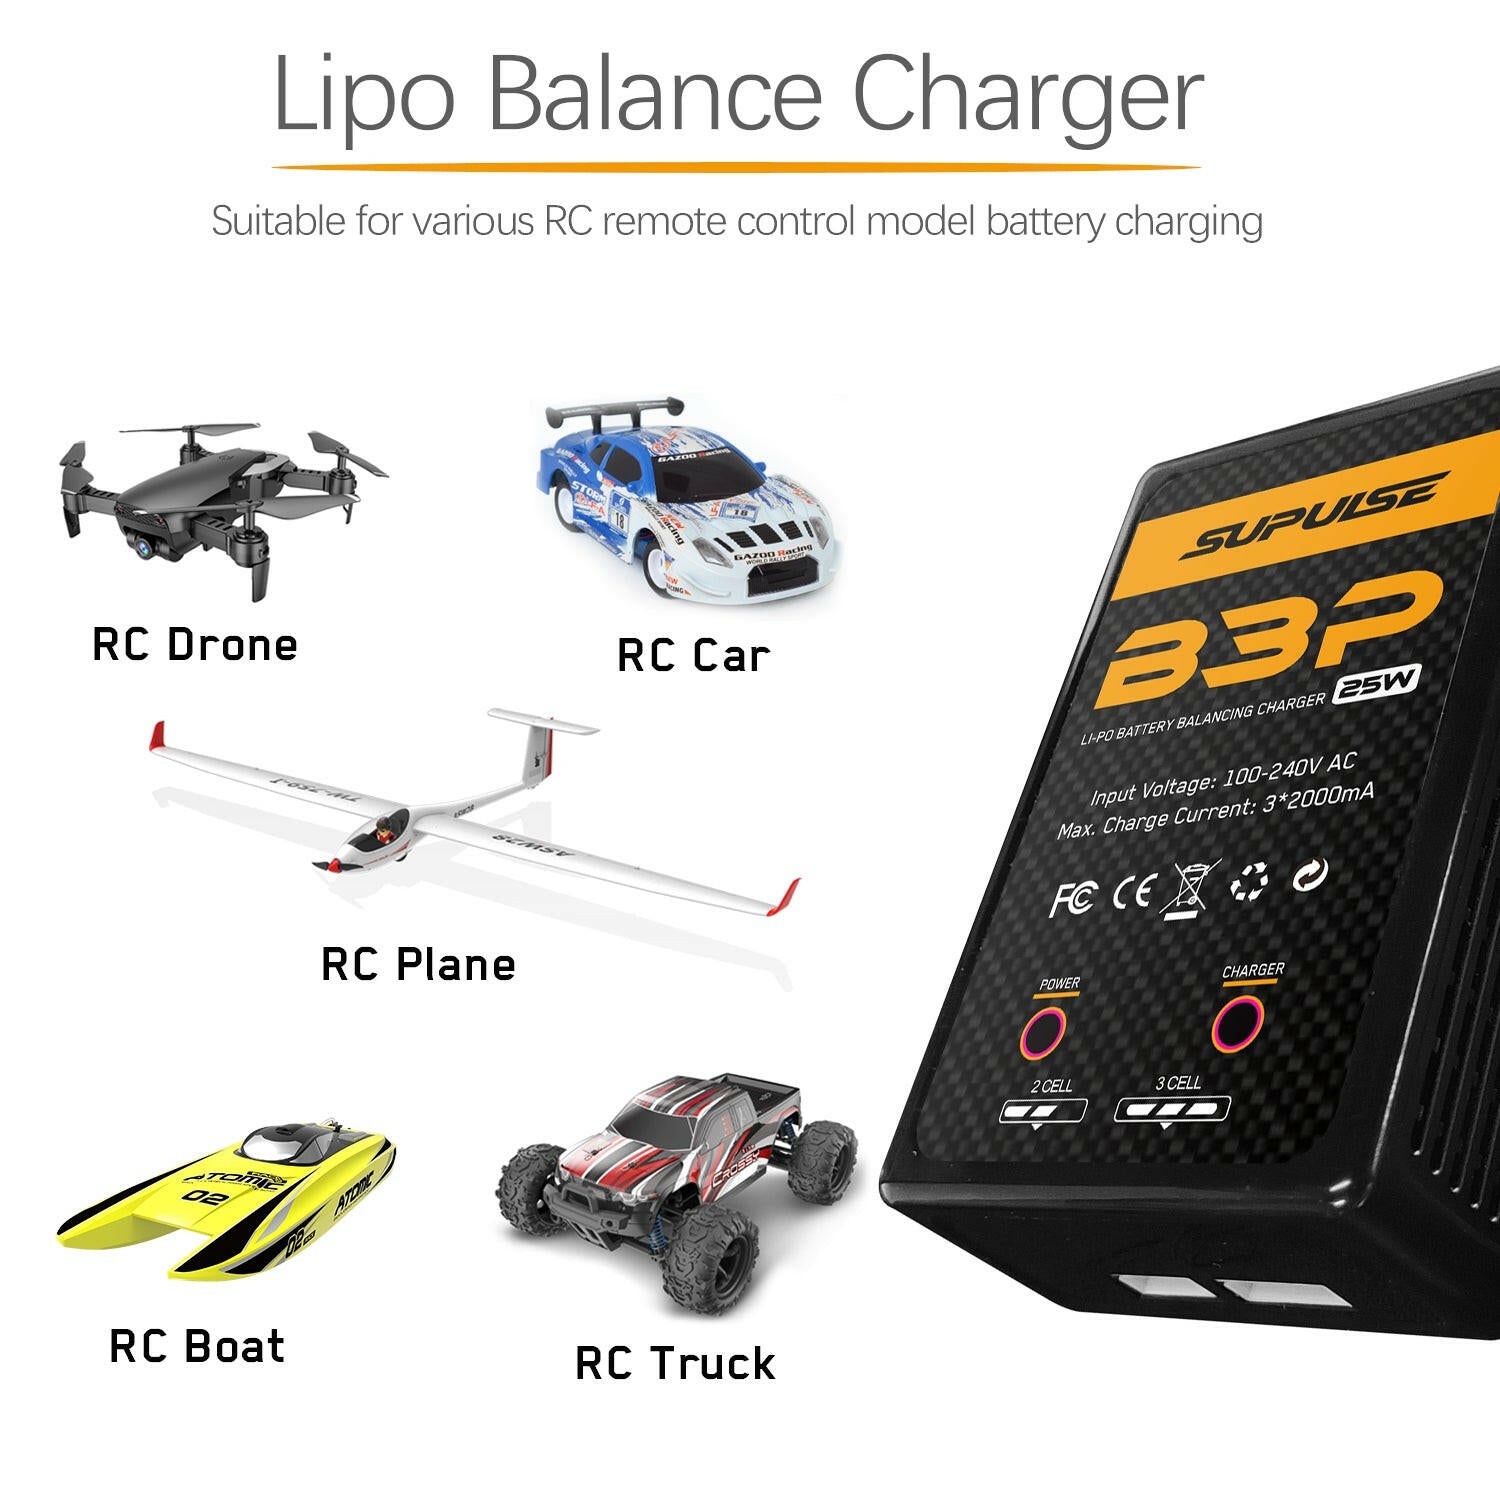 SUPULSE B3P Pro AC 2S-3S 25W Compat LiPo RC Balance Charger